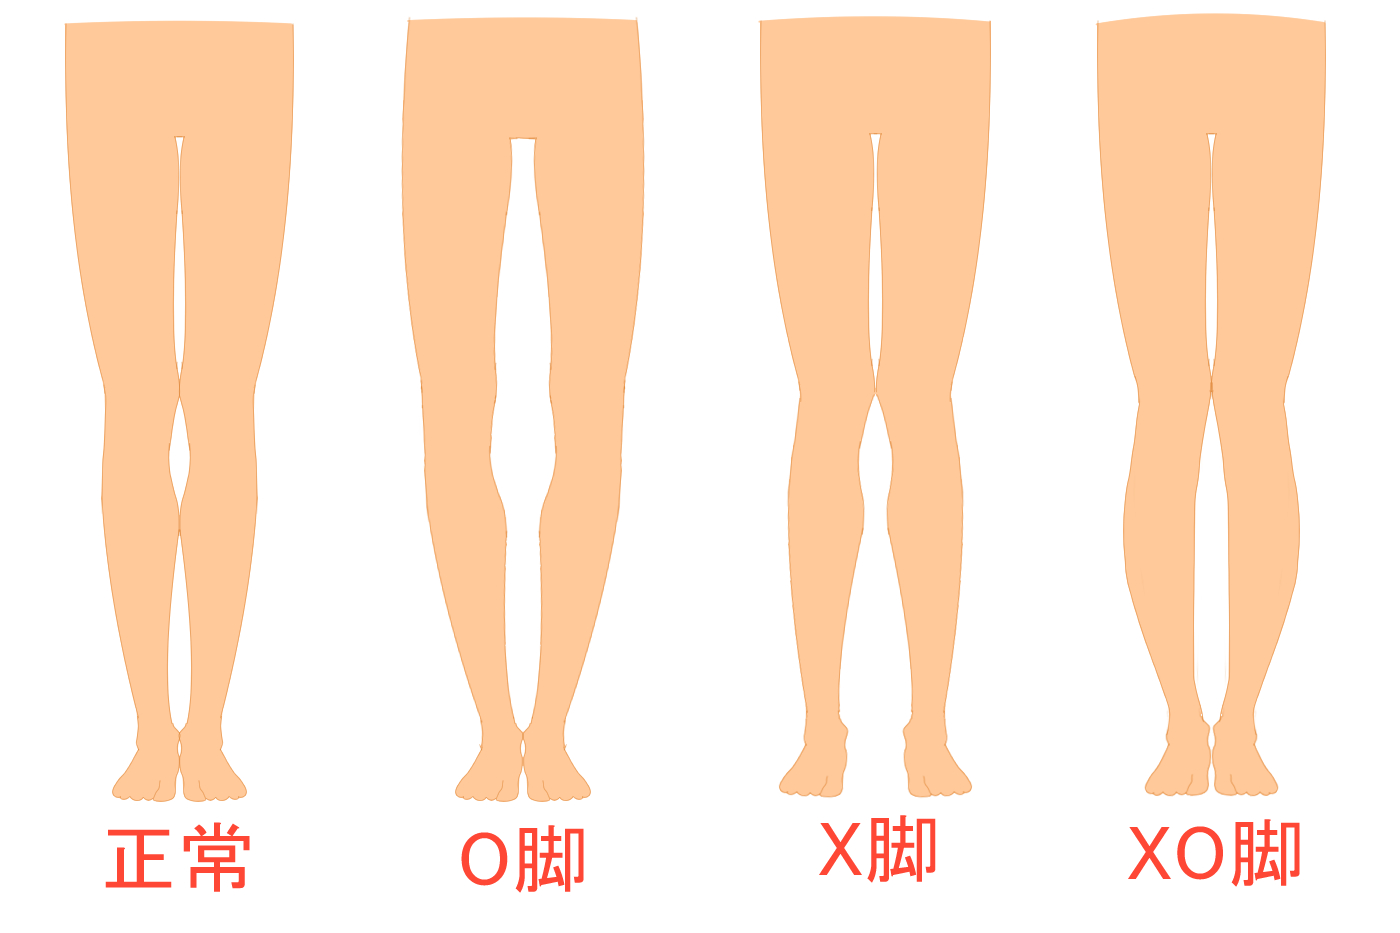 O脚とは 原因や改善 矯正方法を紹介 Tential テンシャル 公式オンラインストア